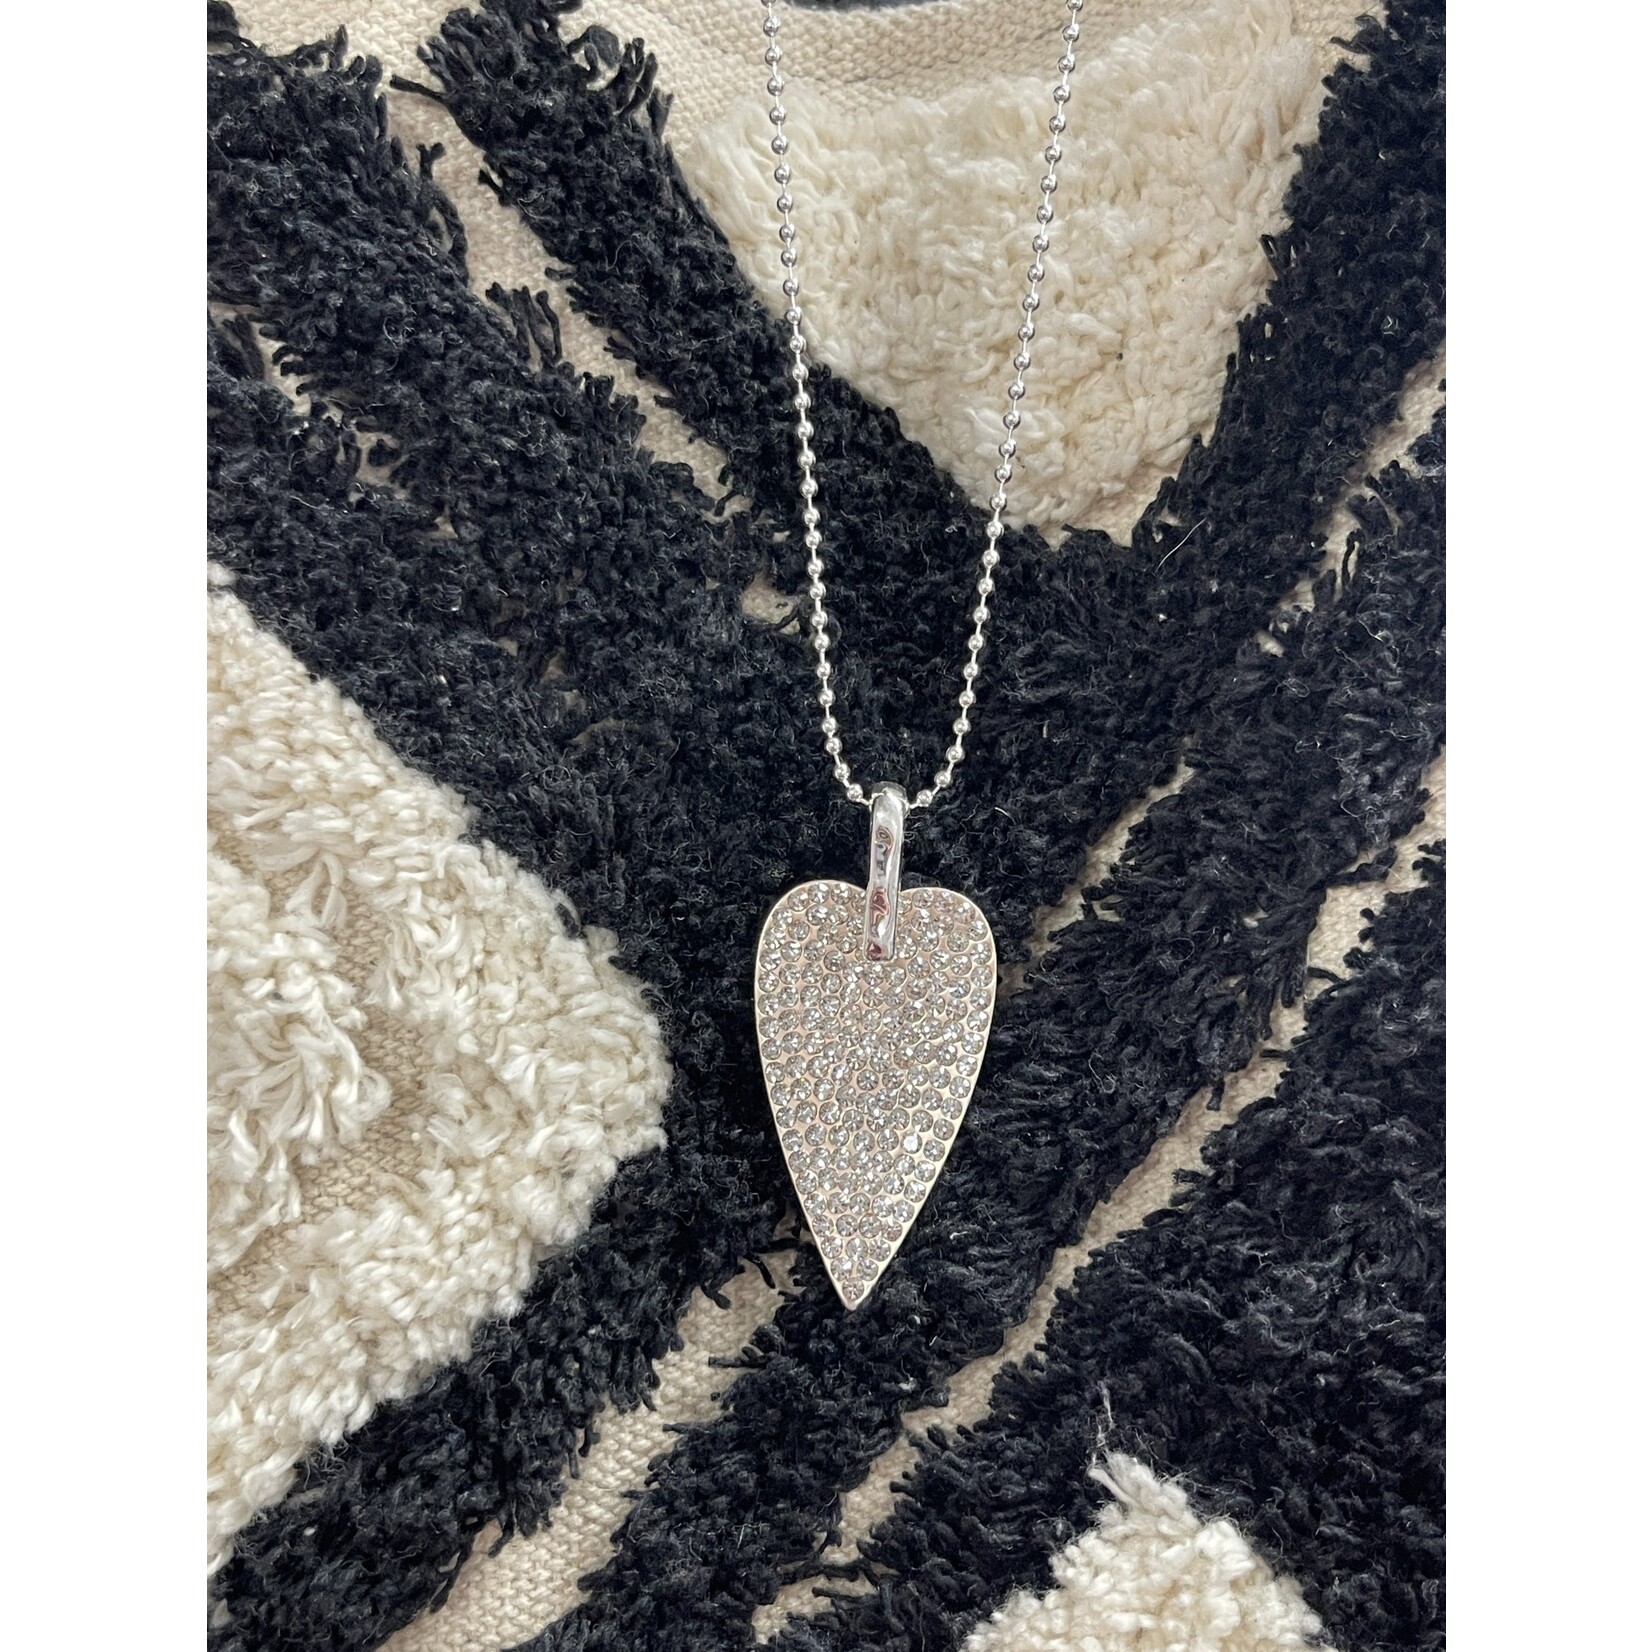 American Unique  Group Sparkly Heart Shape Necklace